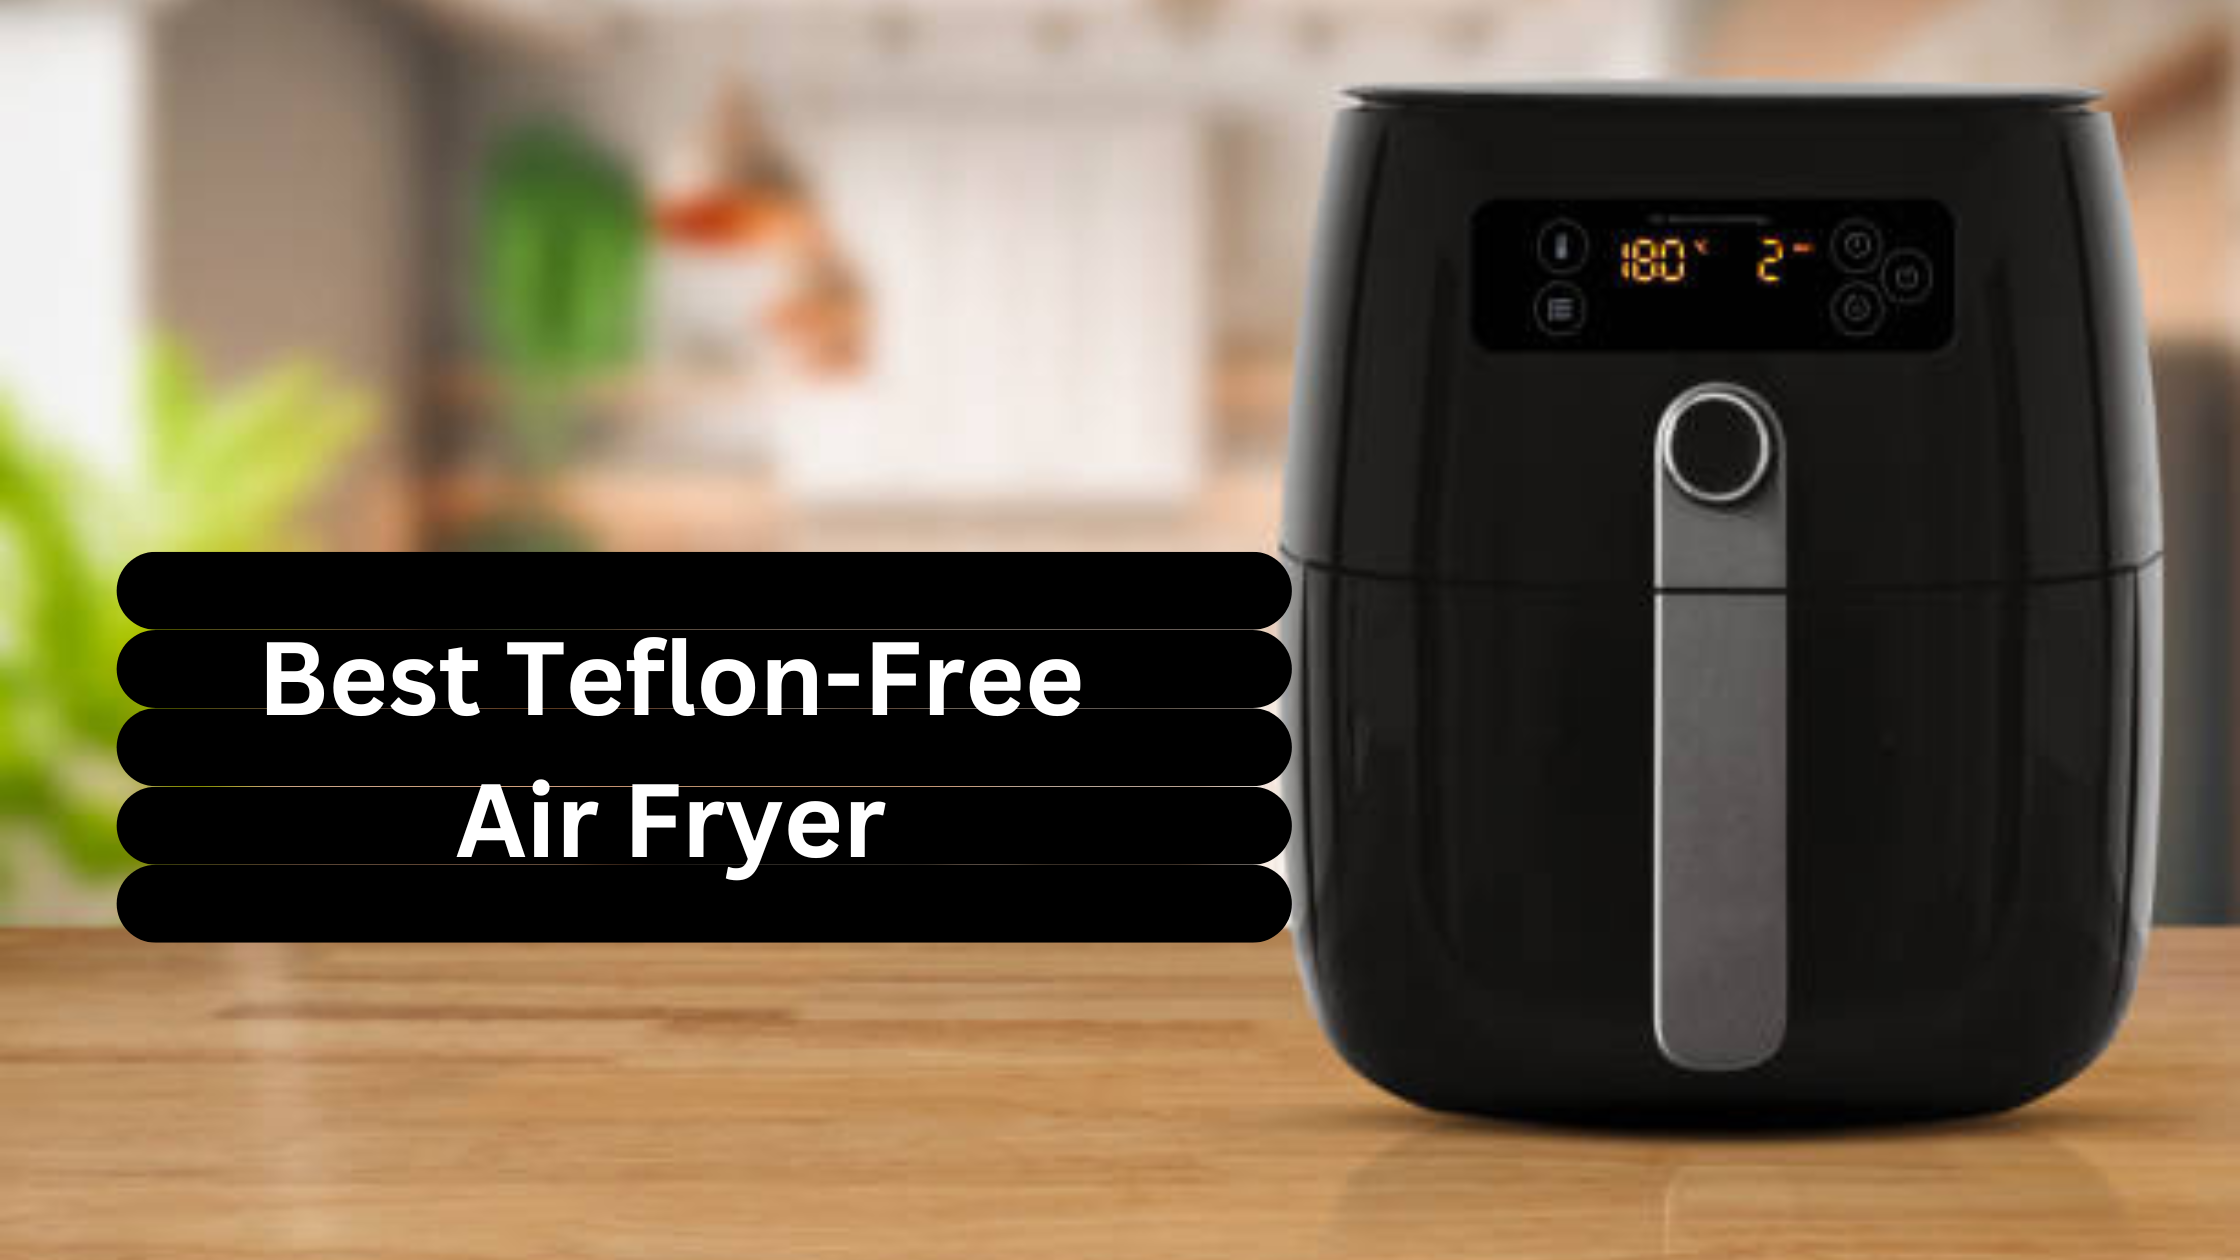 Best Teflon-Free Air Fryer